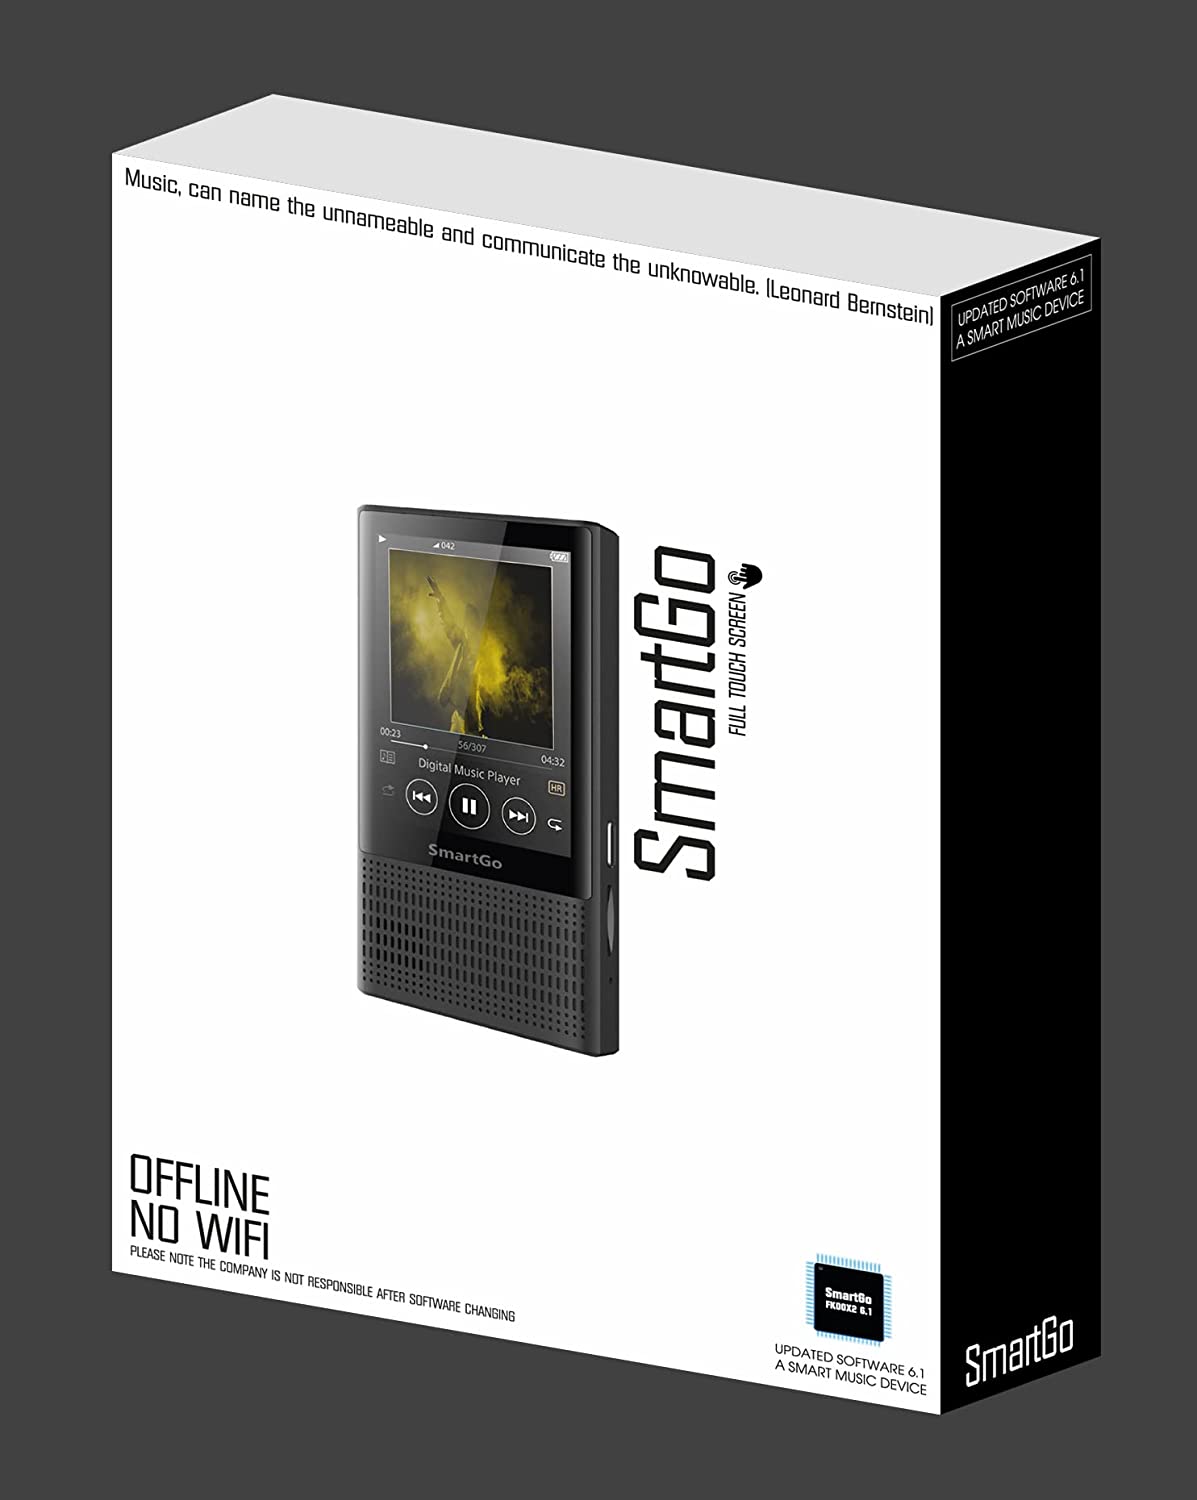 Samvix - SMARTGO, 8GB INTERNAL MEMORY, DIGITAL MP3 PLAYER - BLACK